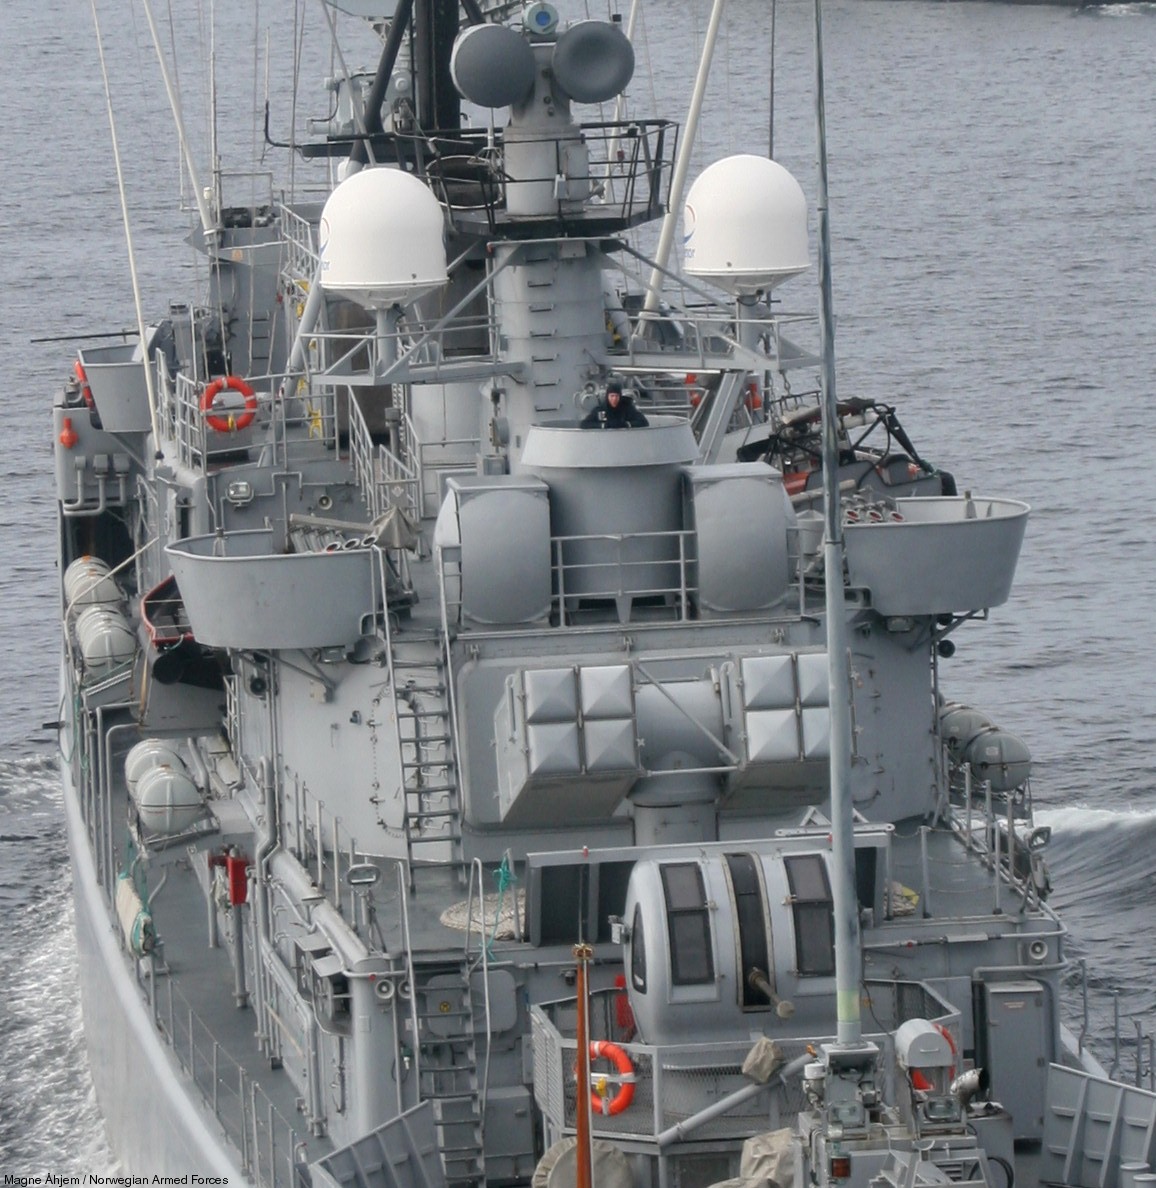 oslo class frigate royal norwegian navy mk-29 launcher rim-7 sea sparrow missile nssm bofors 40mm aa gun